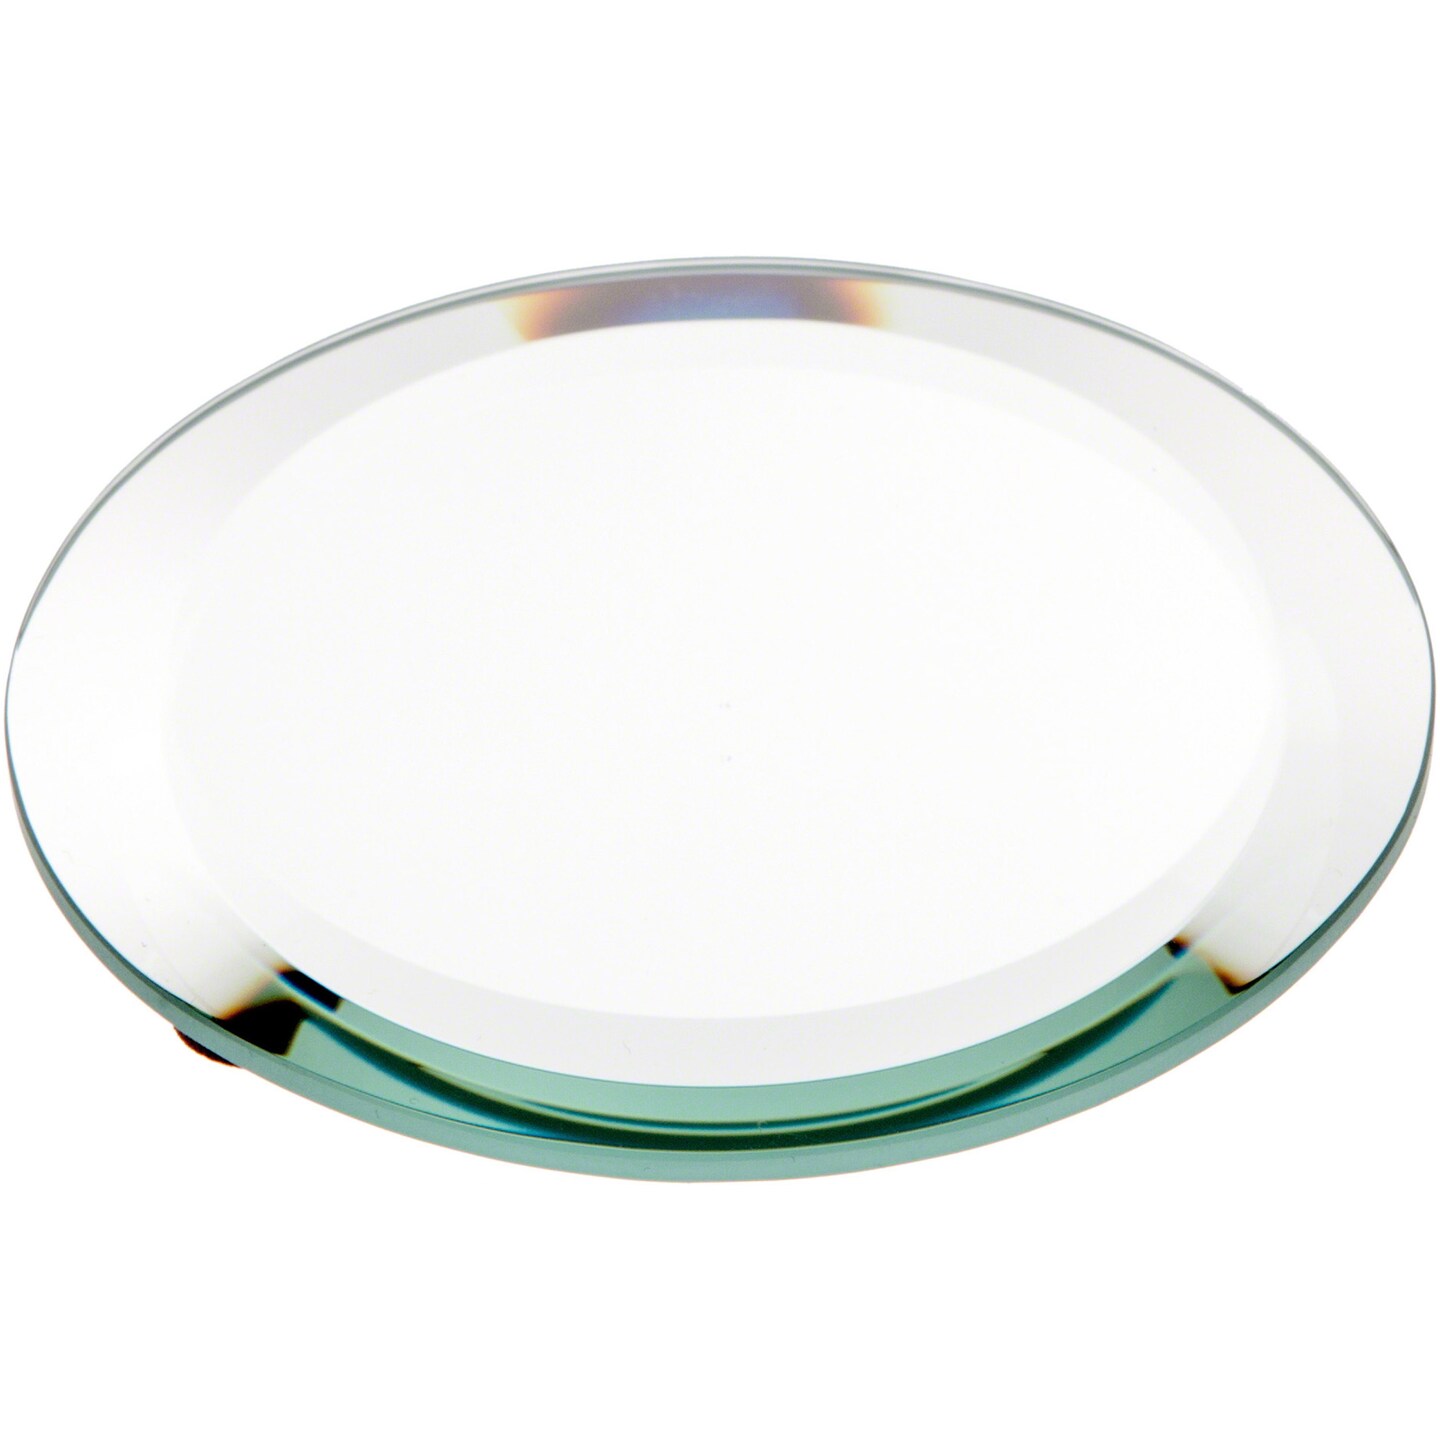 Plymor Round 5mm Beveled Glass Mirror, 4 inch x 4 inch